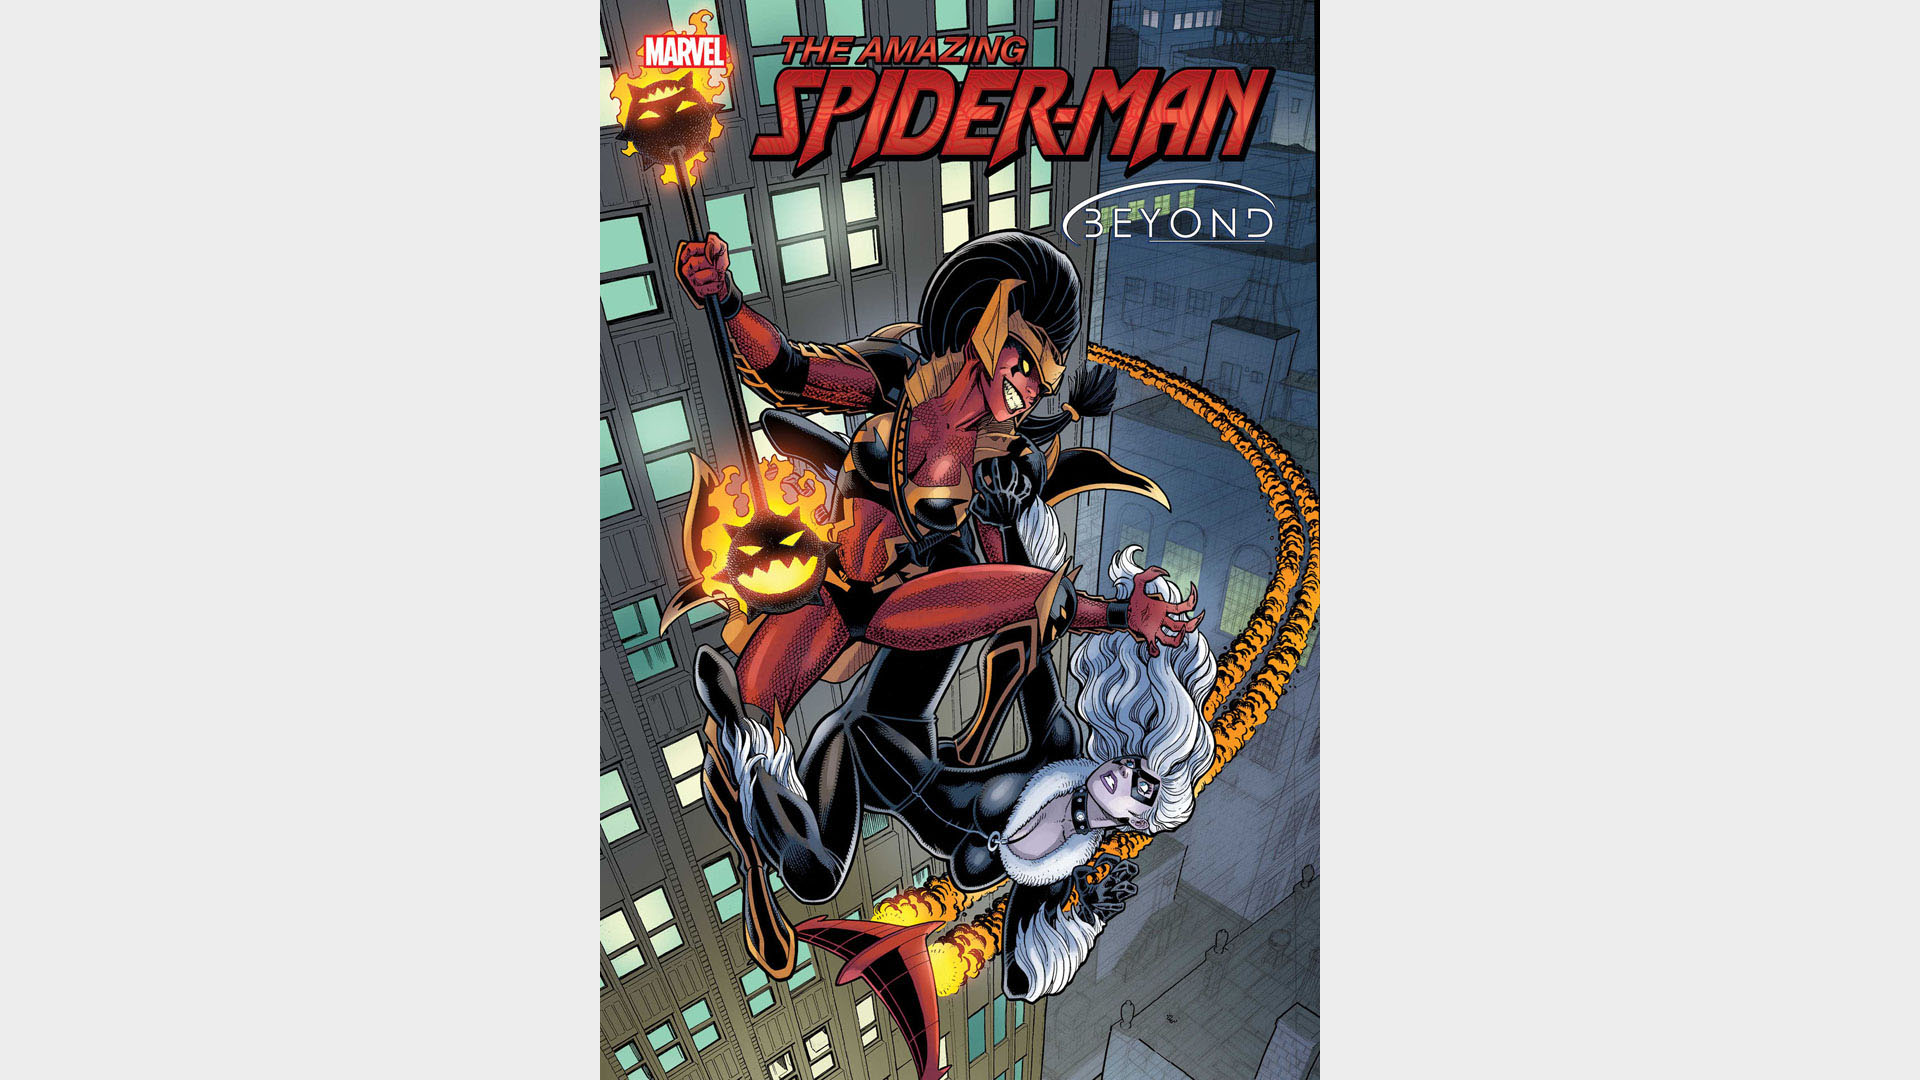 Amazing Spider-Man #89 cover